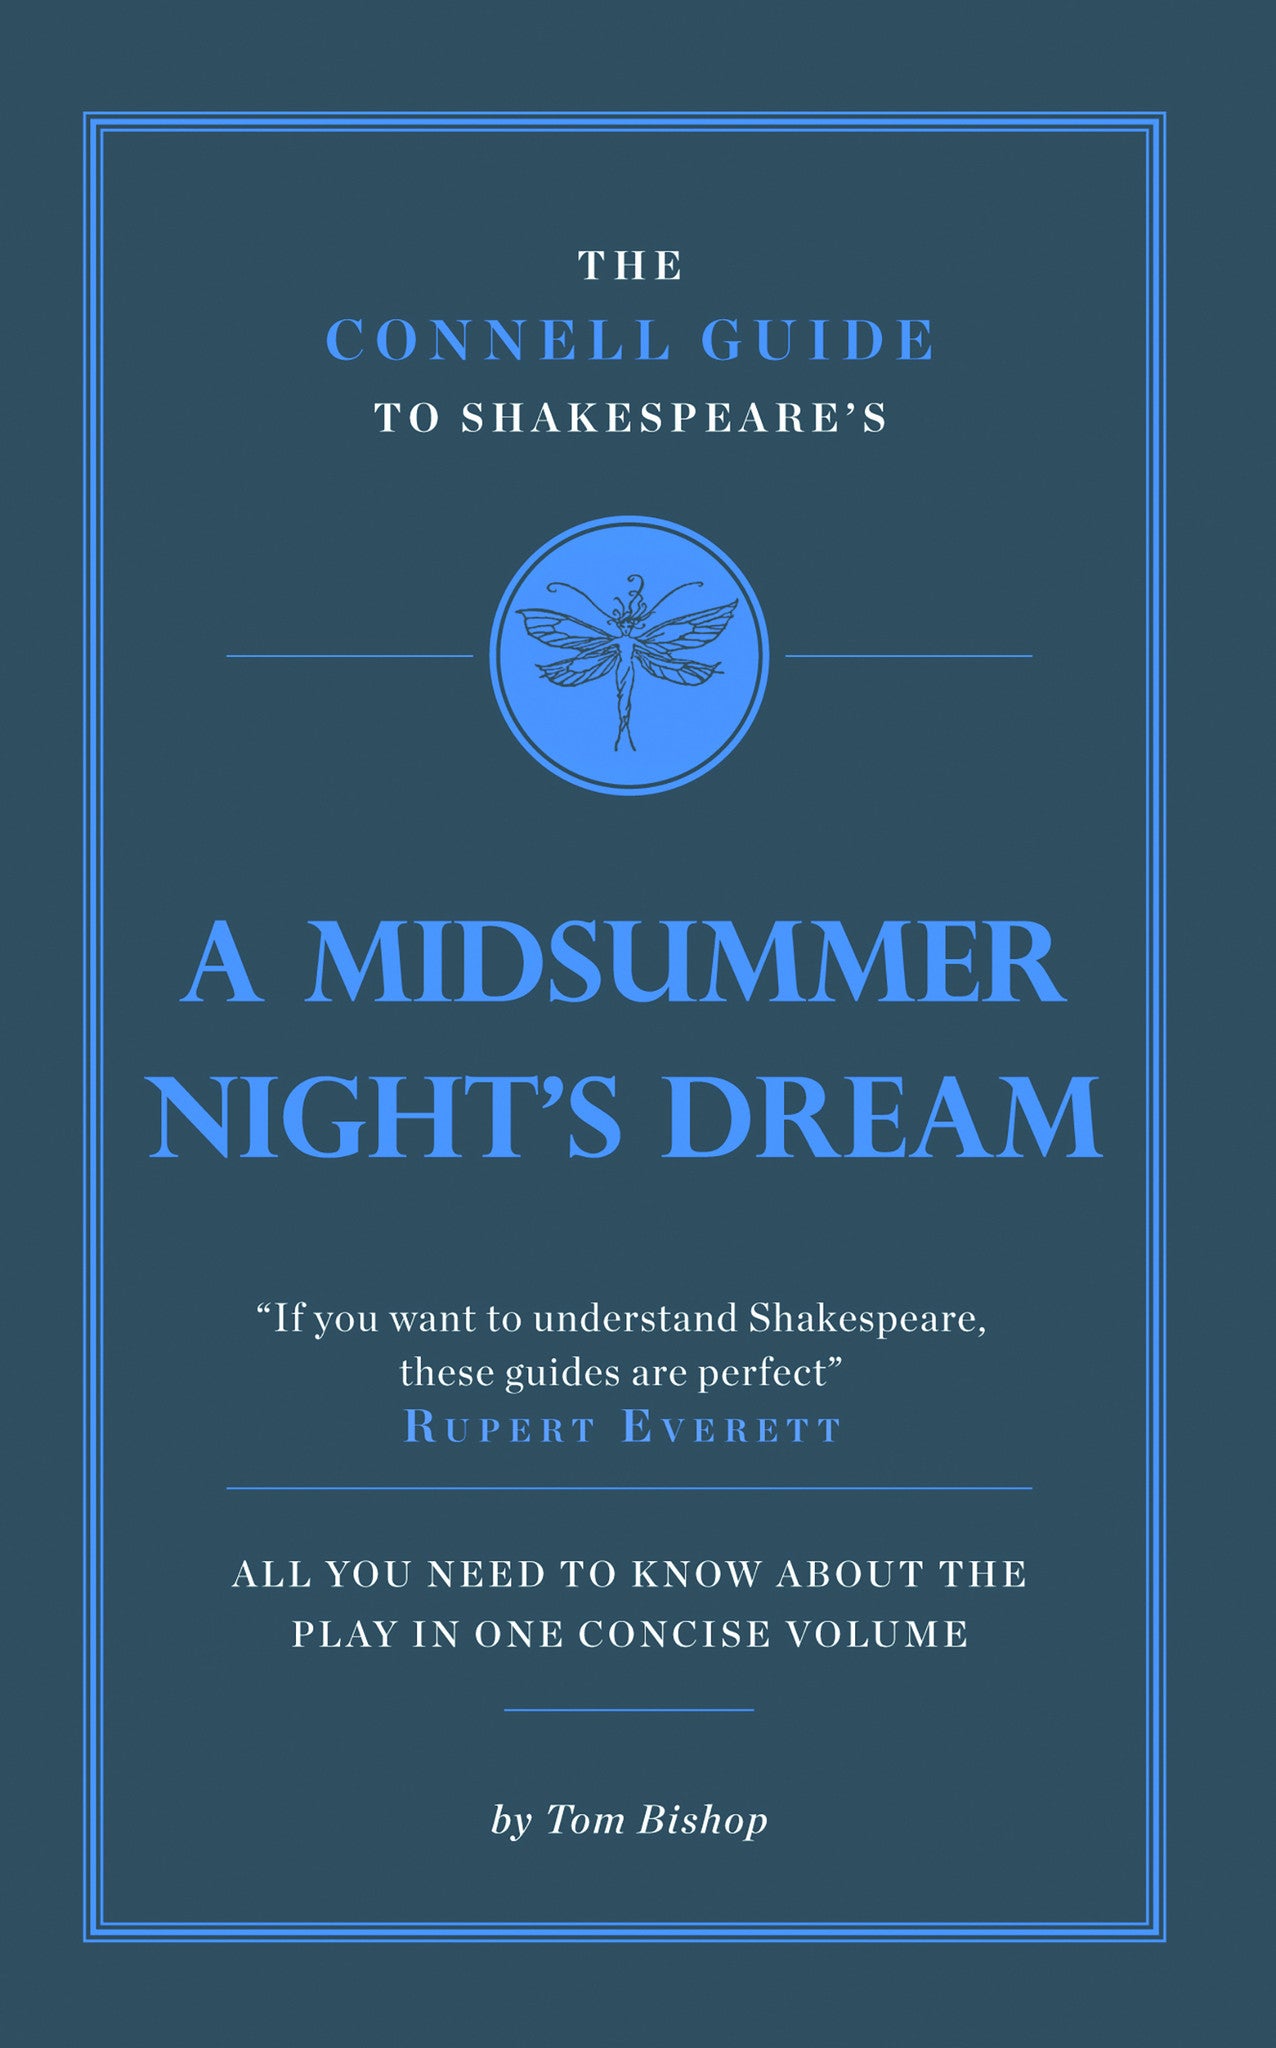 ”A Midsummer Night’s Dream” by William Shakespeare Essay Sample